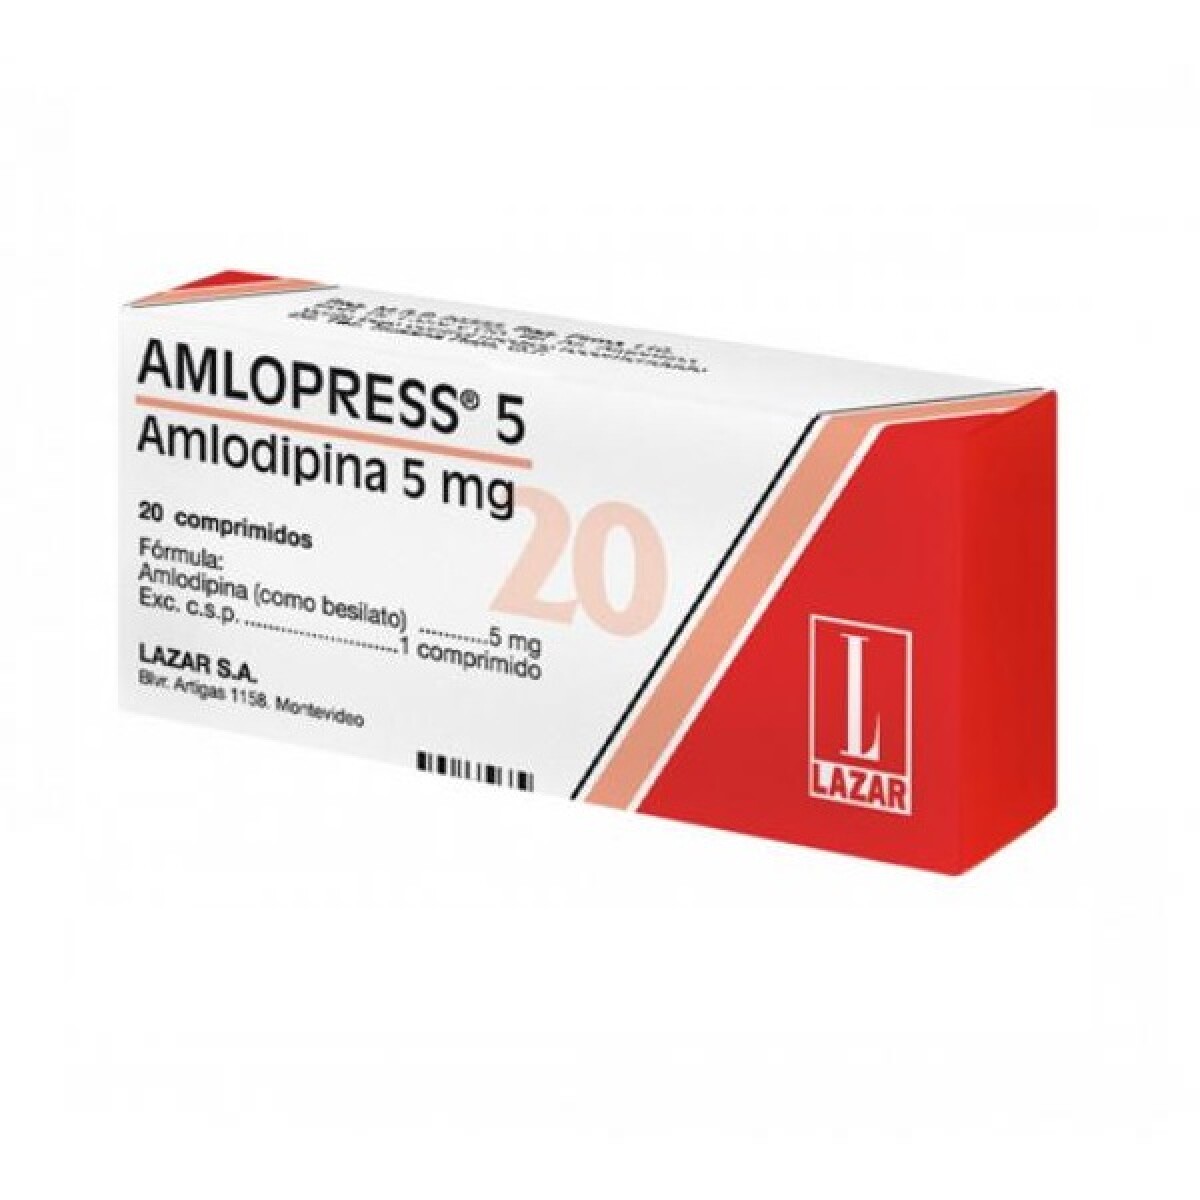 Amlopress 5 Mg. 20 Comp. 